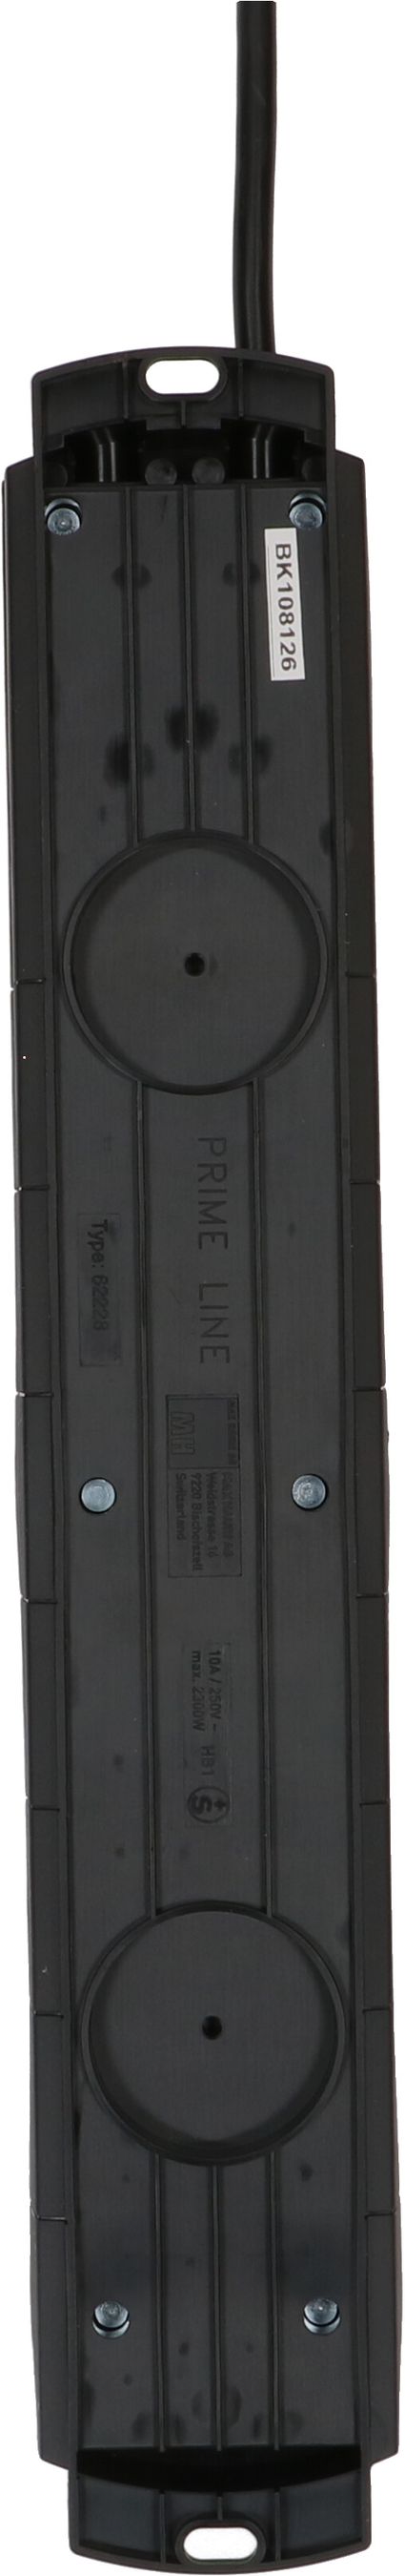 Steckdosenleiste Prime Line 8x Typ 13 schwarz 3m